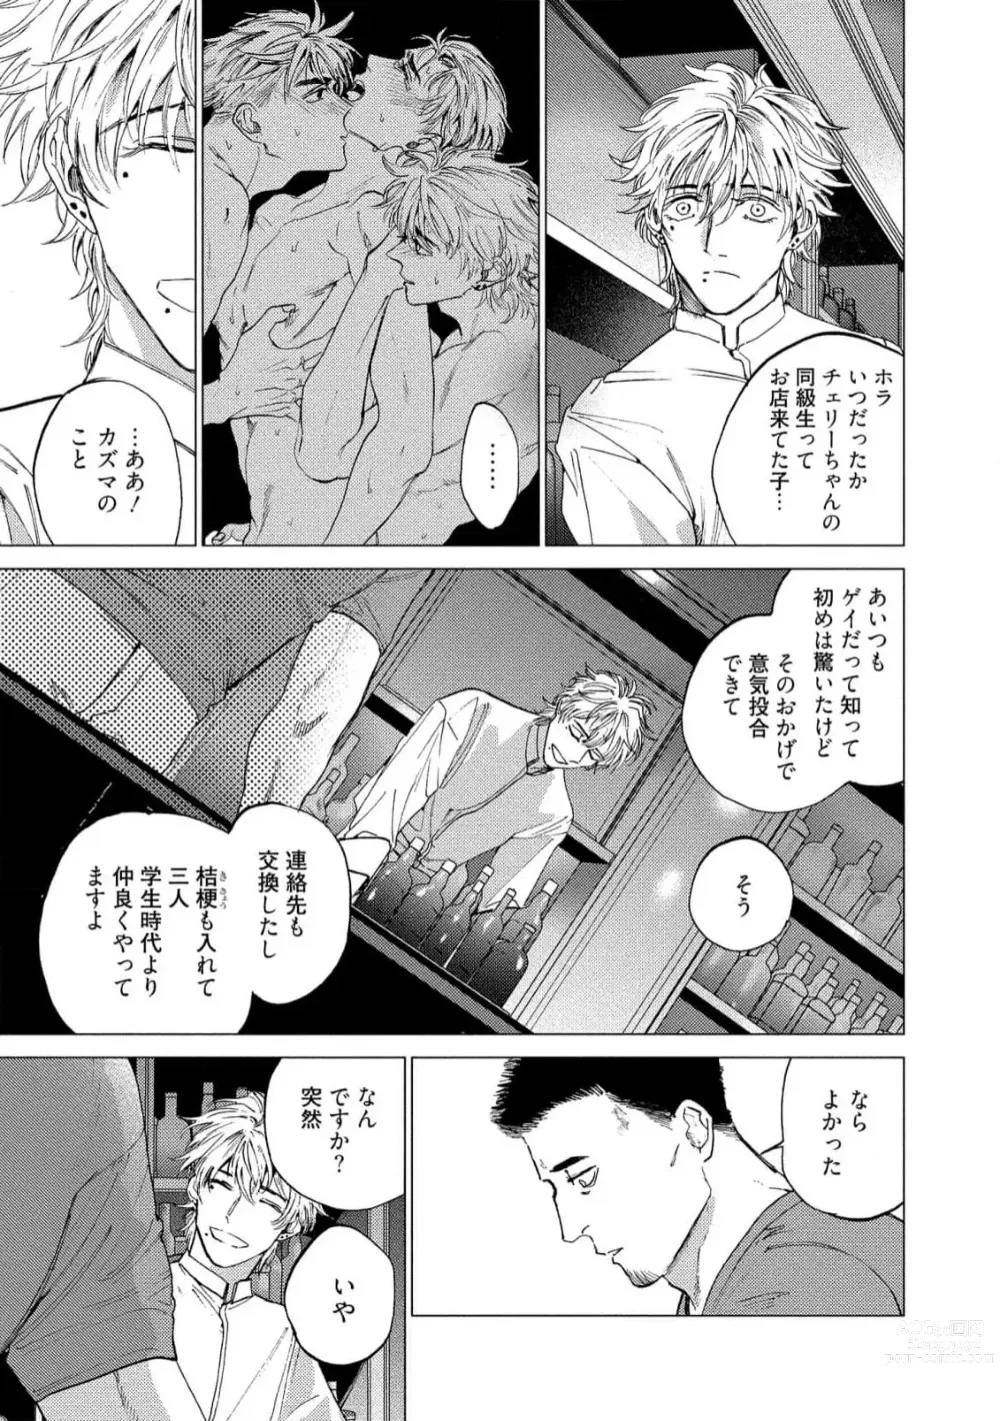 Page 7 of manga Fukushuu ga Tokenai